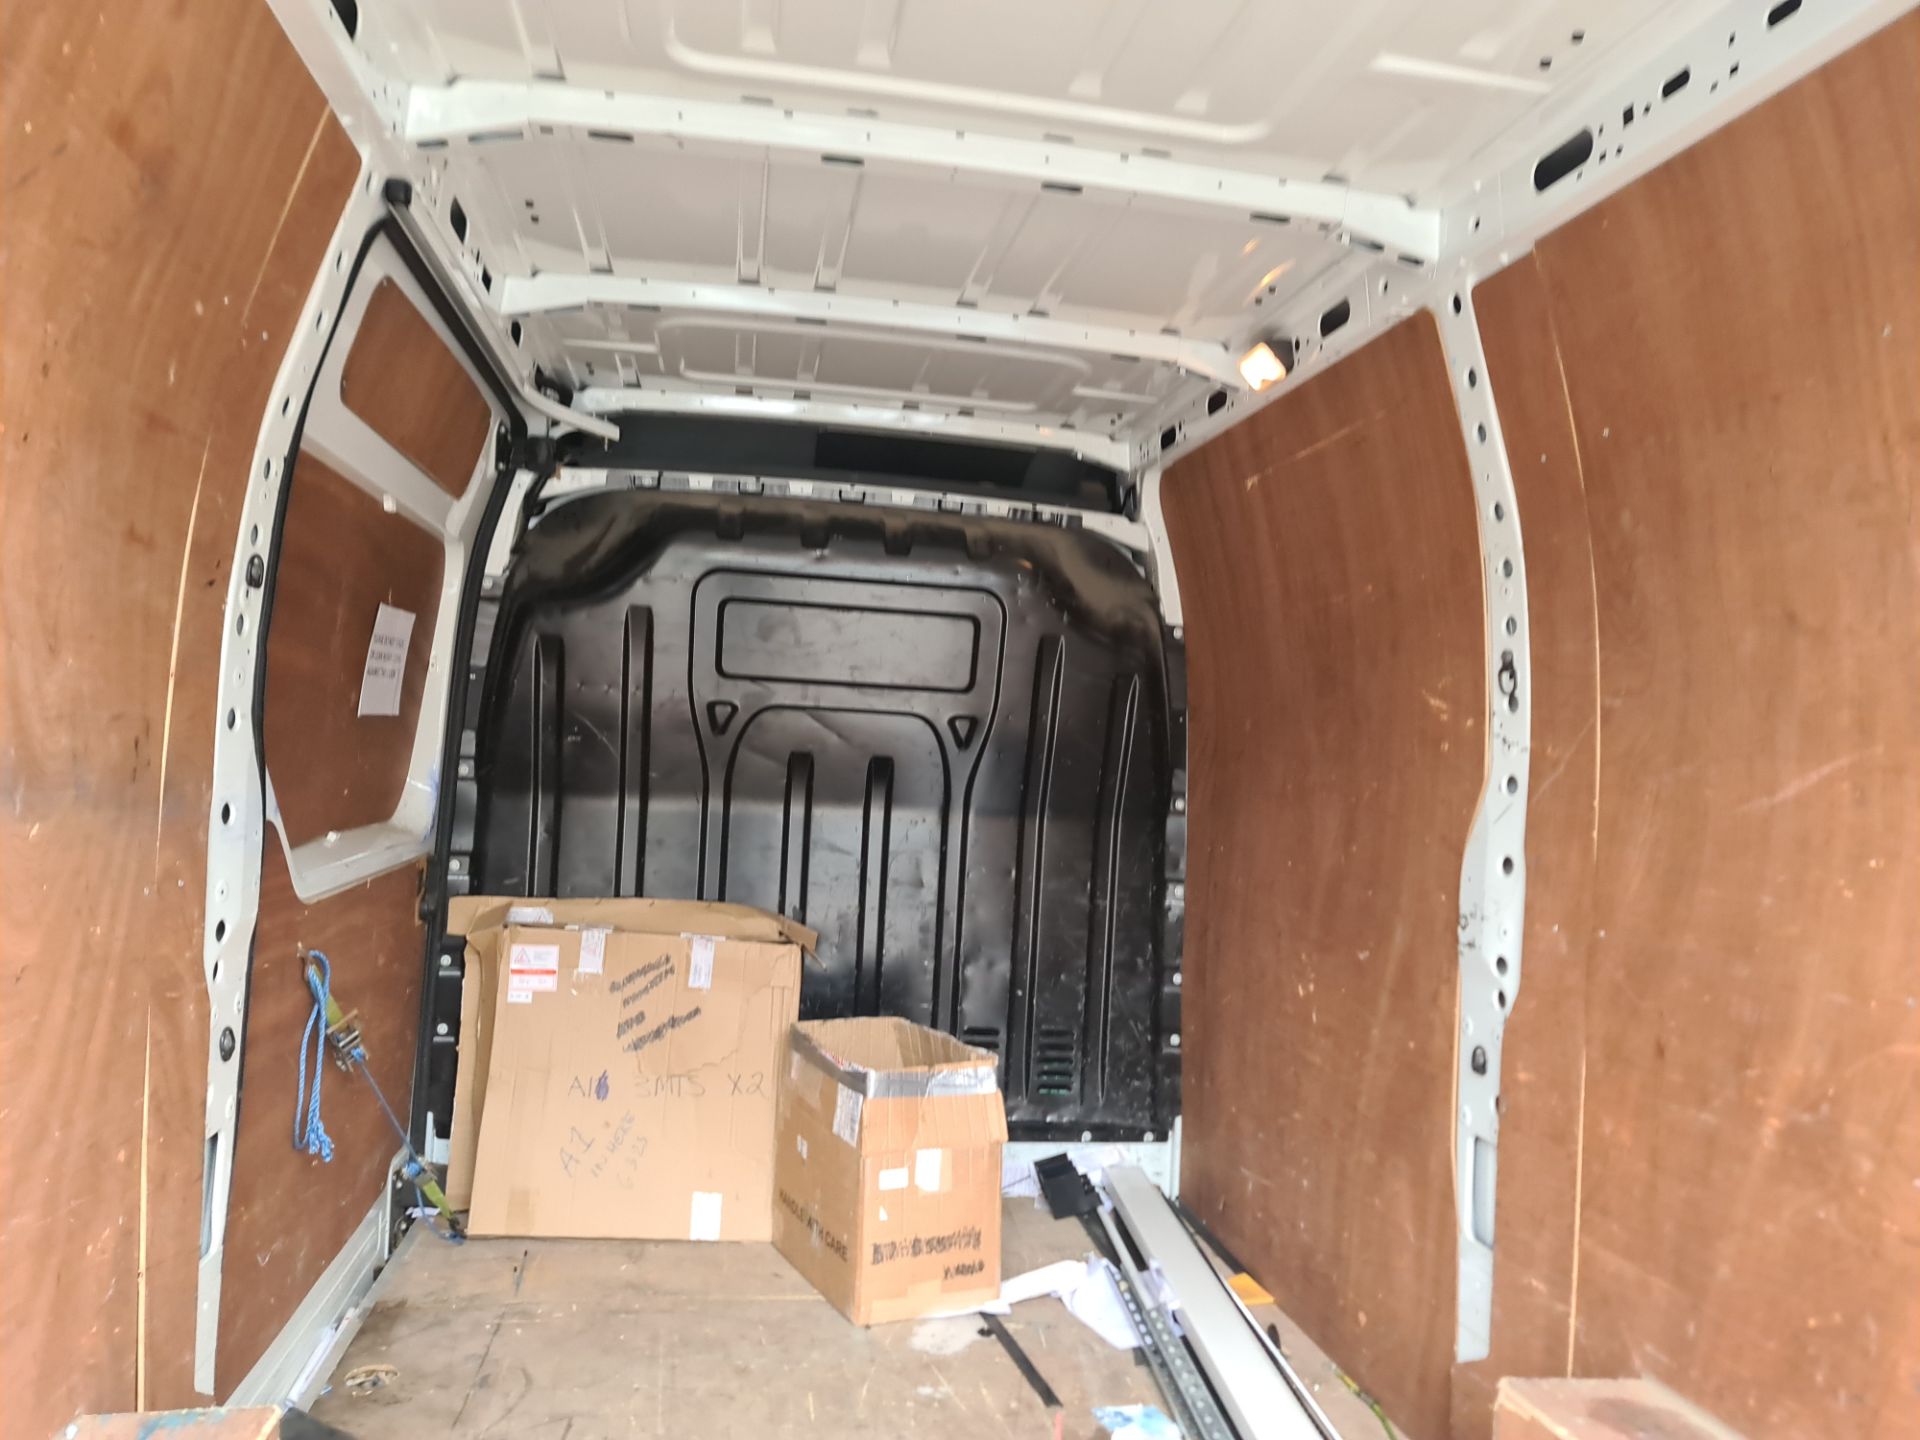 2015 Nissan NV400 SE DCI panel van - Image 37 of 74